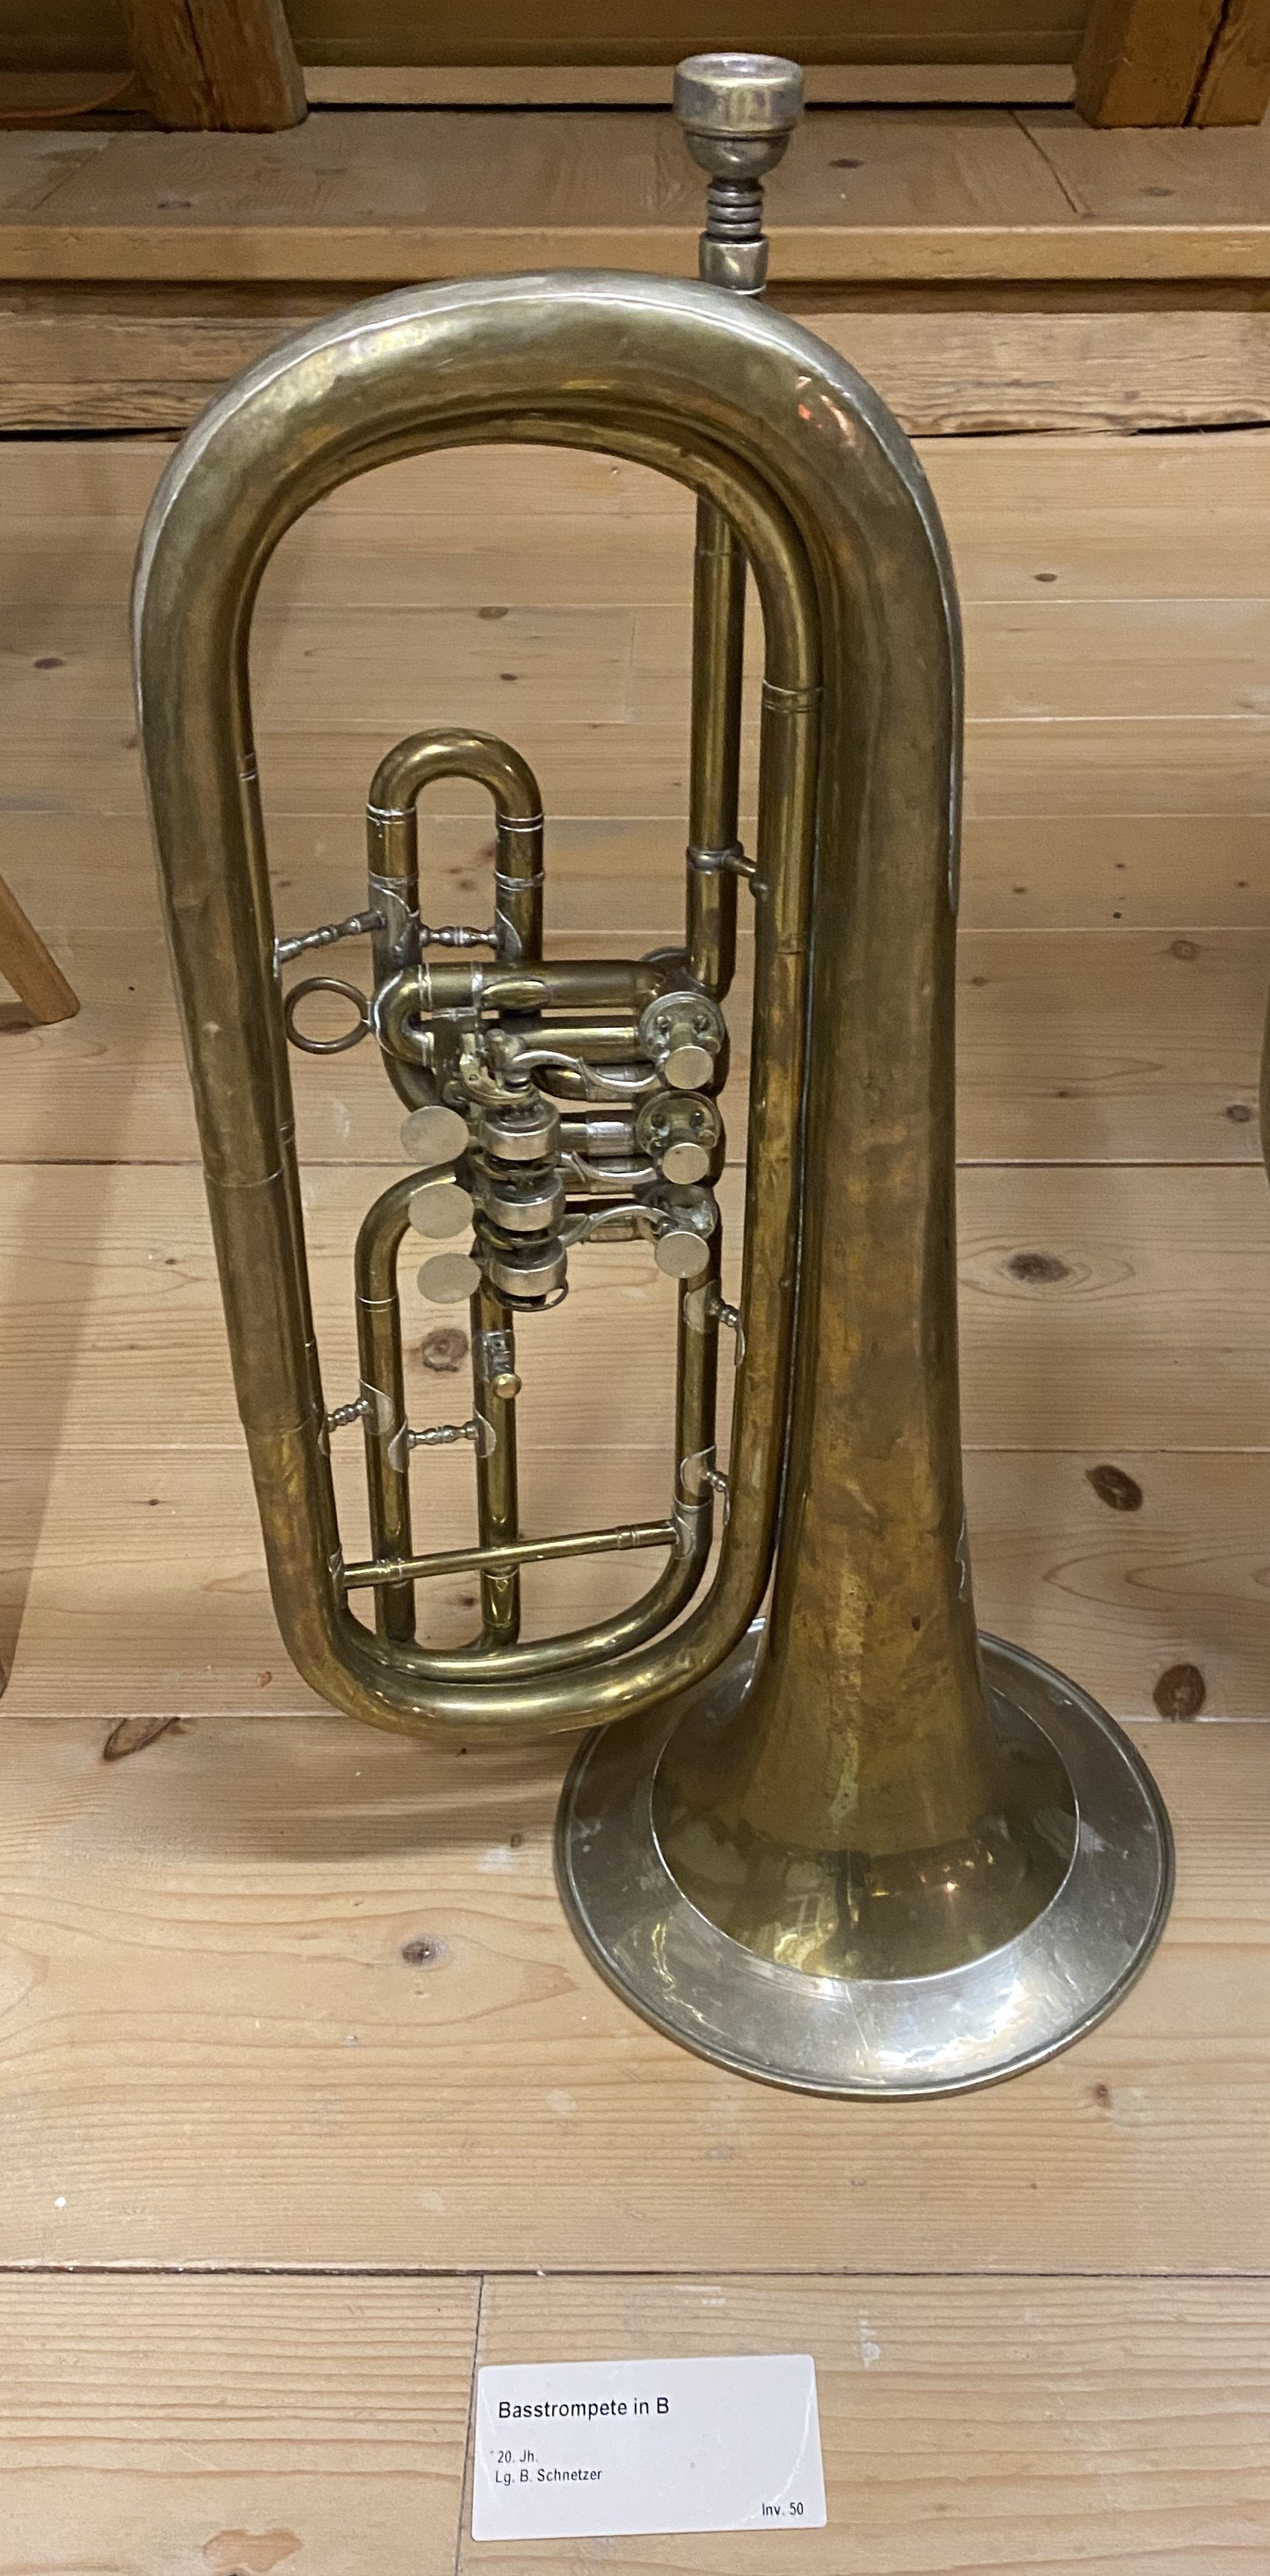 MIB_0050 Basstrompete in B (Geschichts- und Heimatverein Eglofs e.V. CC BY-NC-SA)